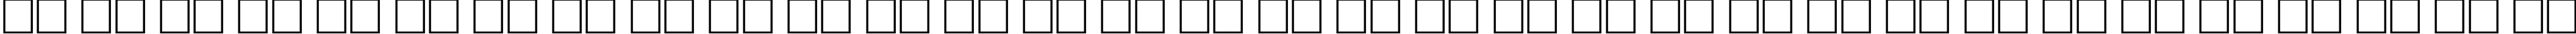 Пример написания русского алфавита шрифтом Futura Black Narrow